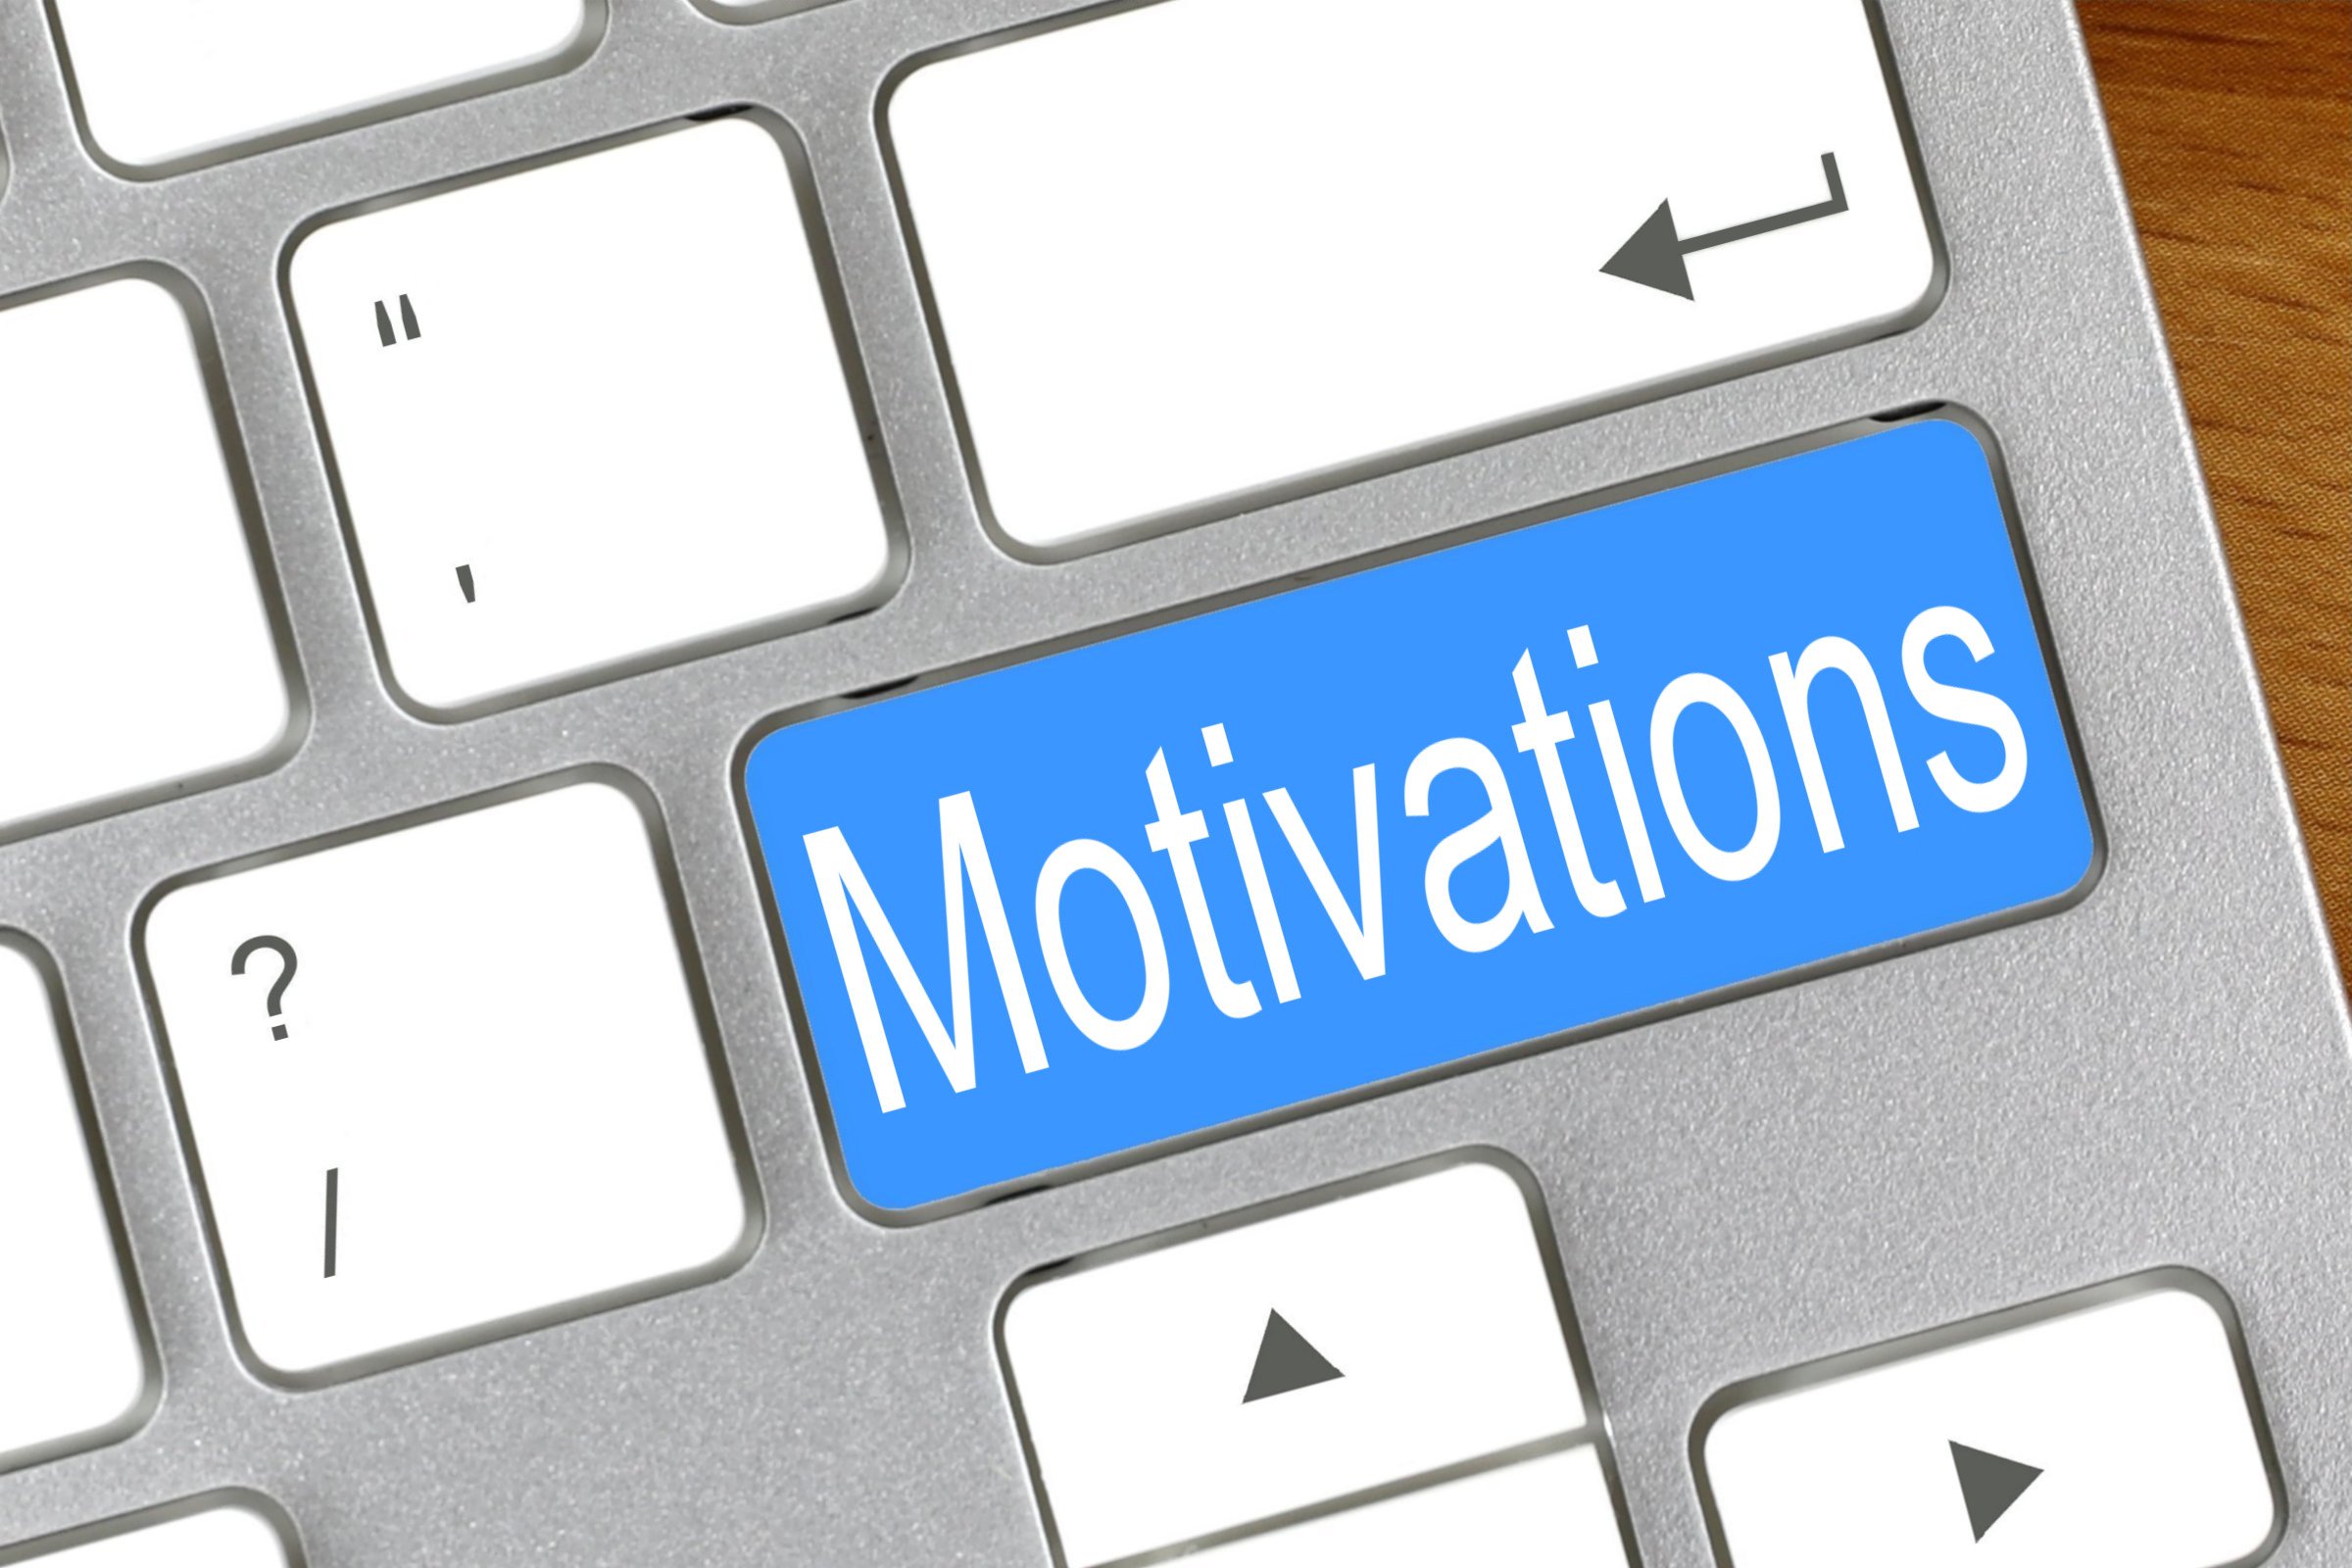 motivations